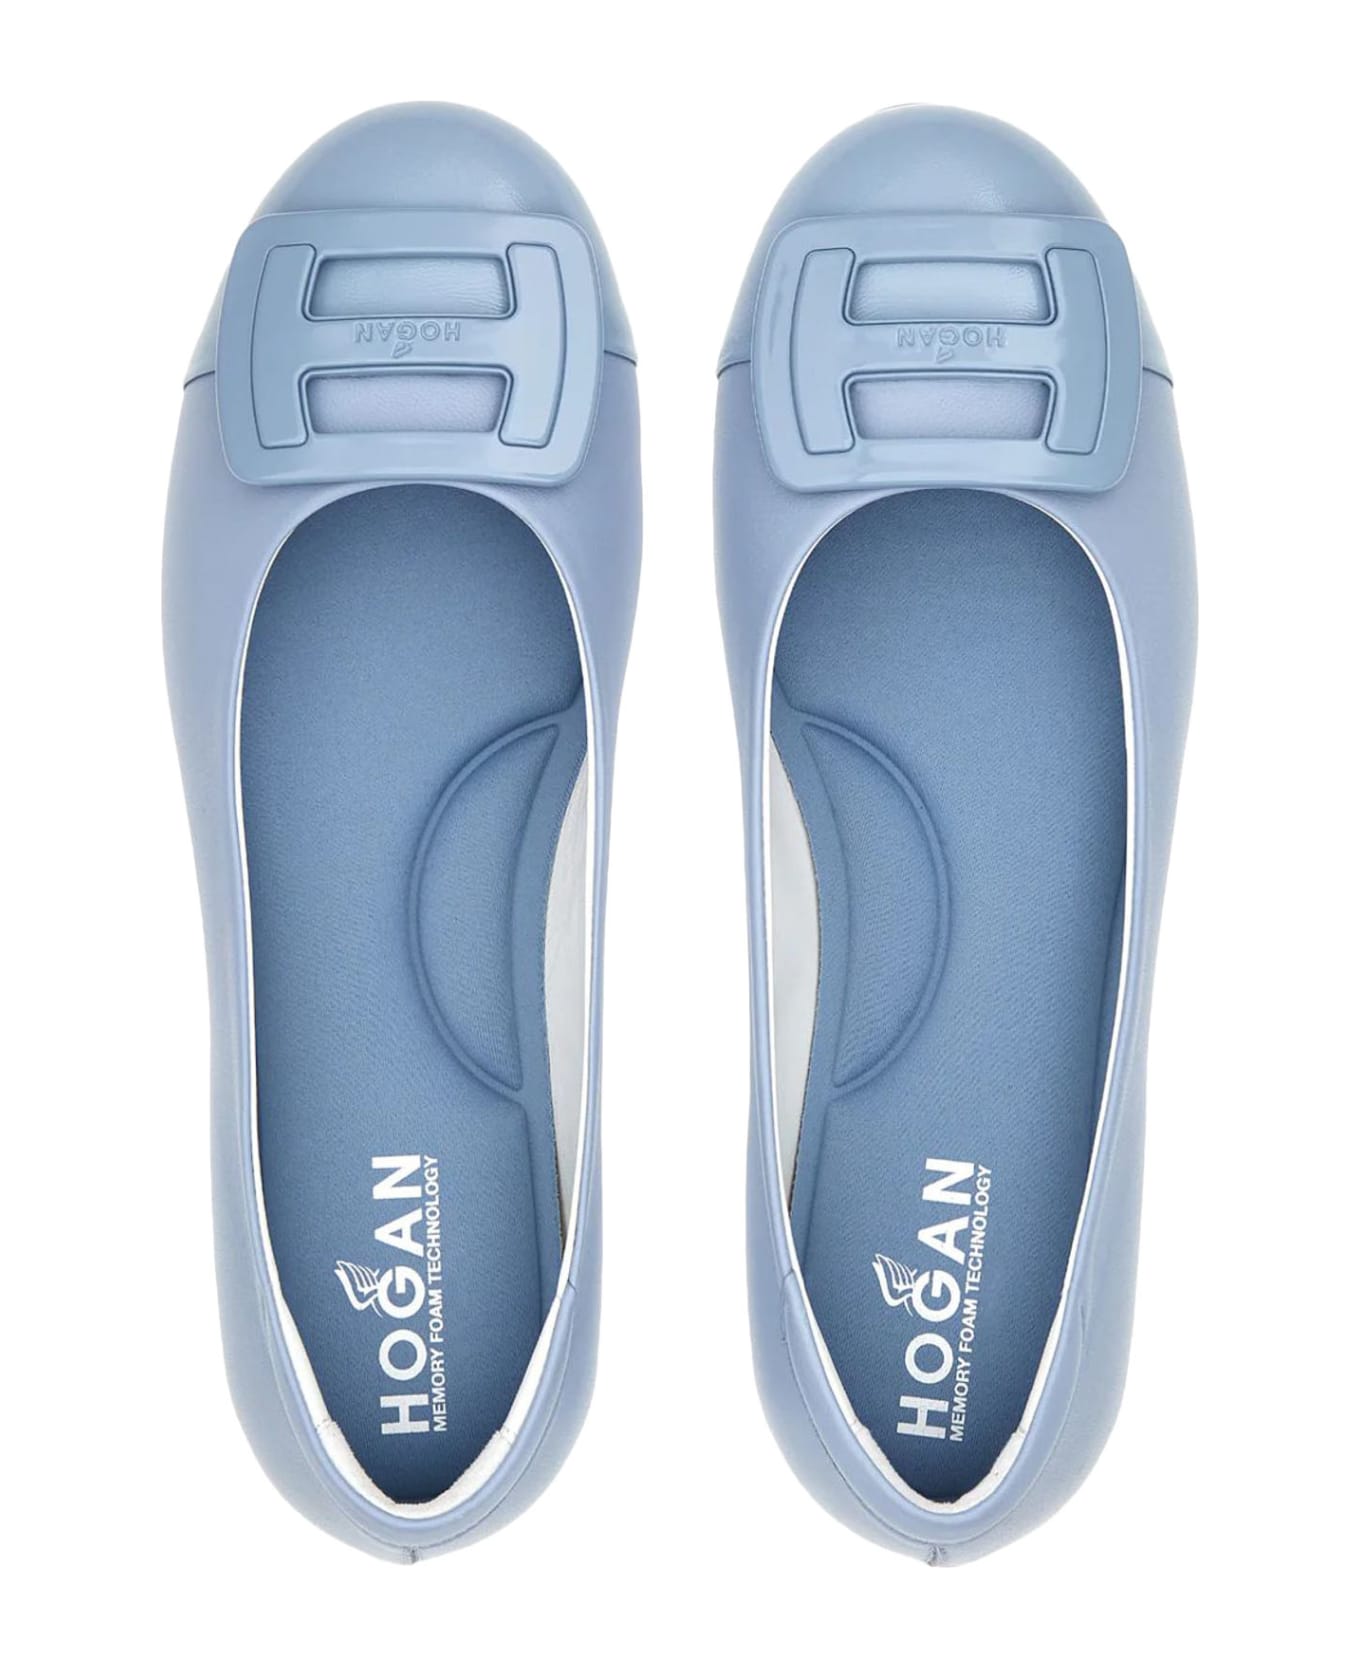 Hogan Flat Shoes Clear Blue - Clear Blue